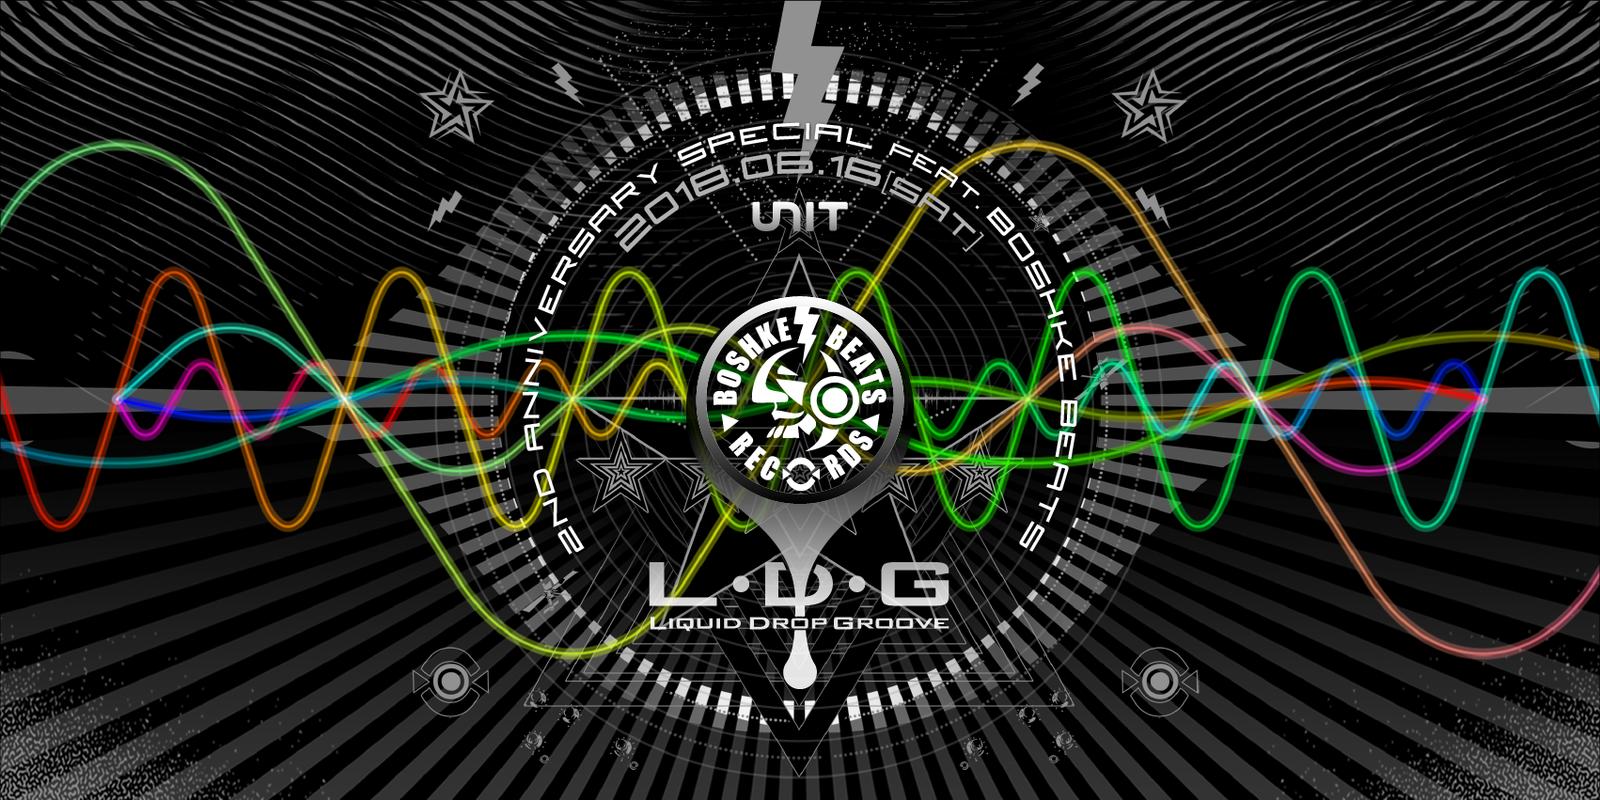 Liquid Drop Groove "2nd Anniversary Special Feat. Boshke Beats"